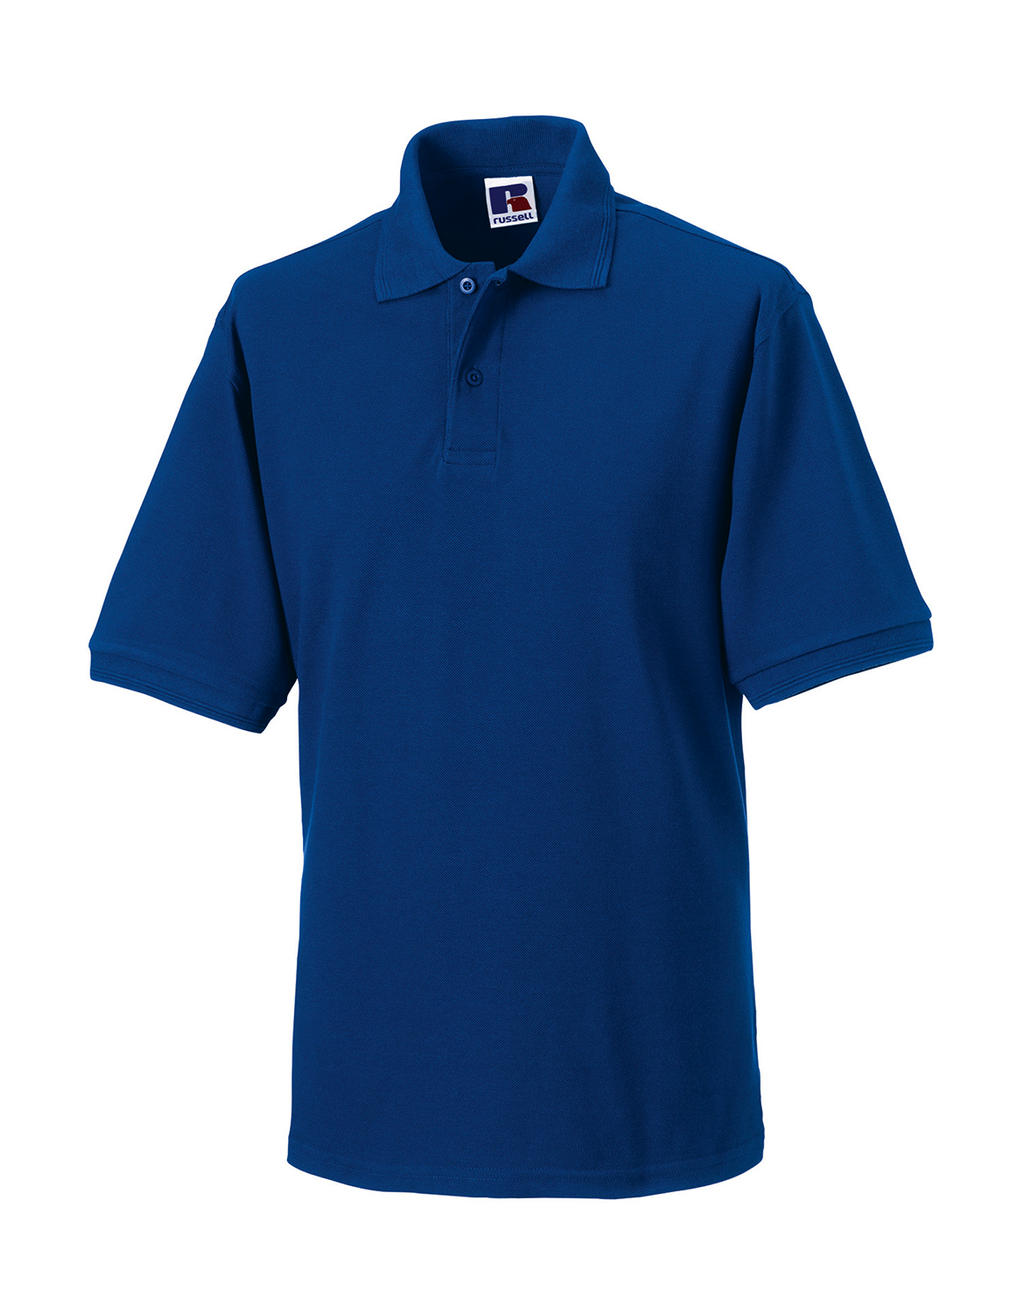 Russel Europe Herren Polo Shirt Polohemd Shirt T-Shirt Polo Kurzarm